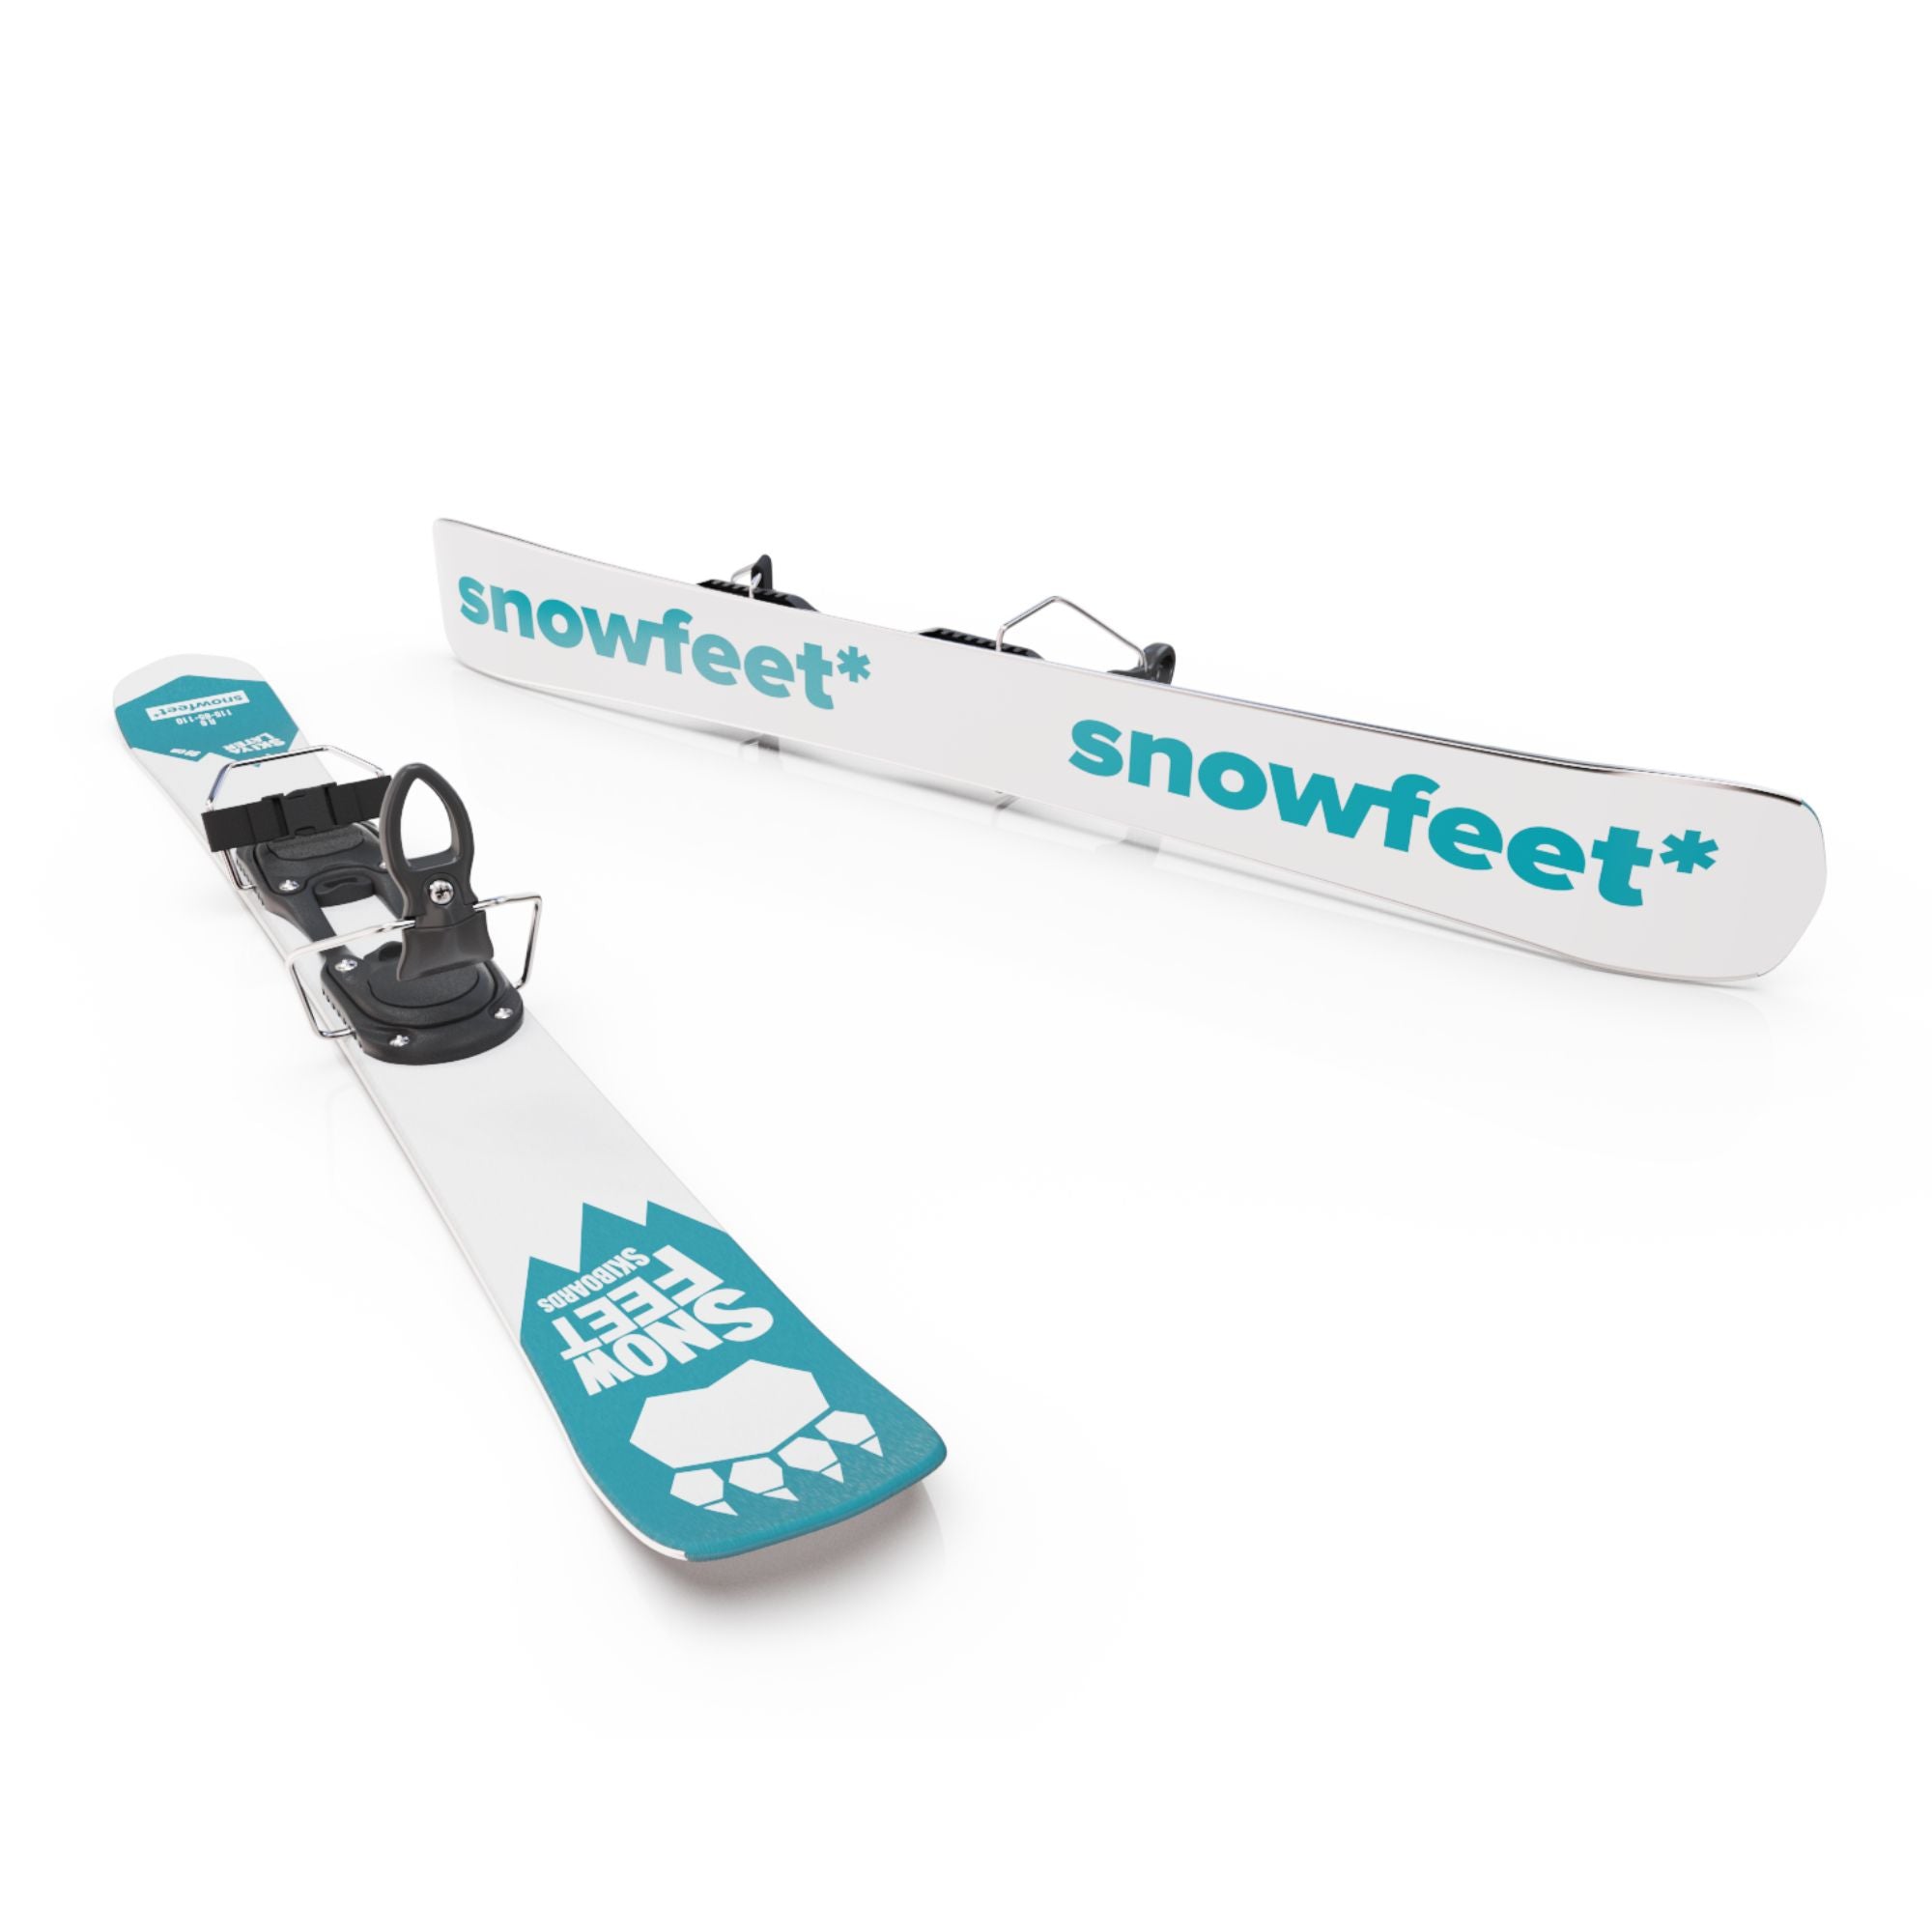 skiboards snowblades short ski 99 snowfeet mini little ski skiblades for ski with ski boot bindings blue turquoise